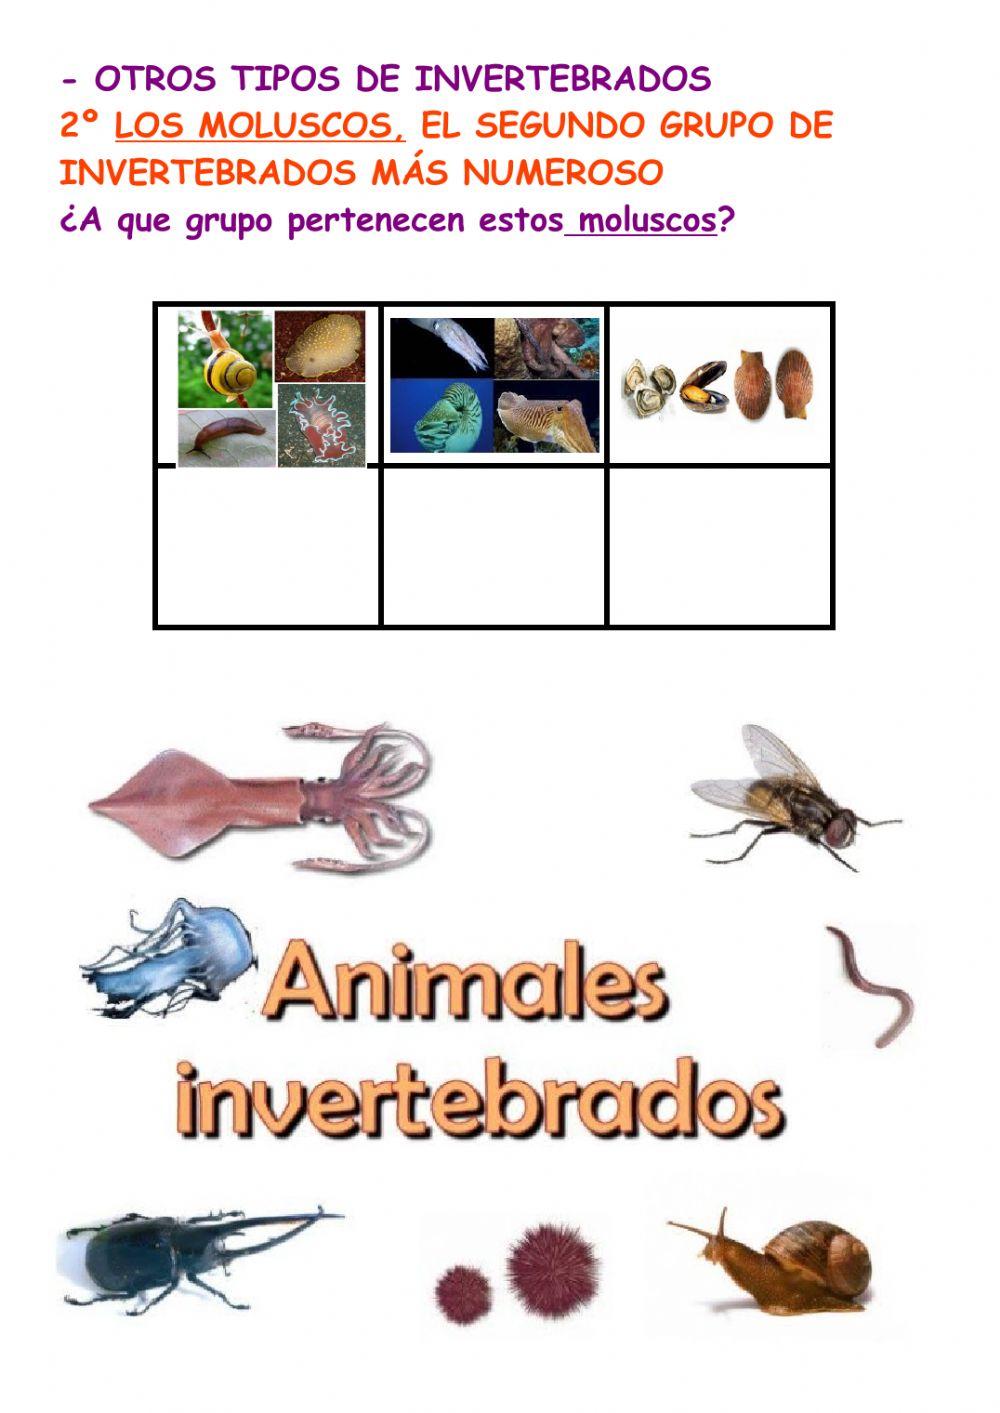 Clases de invertebrados